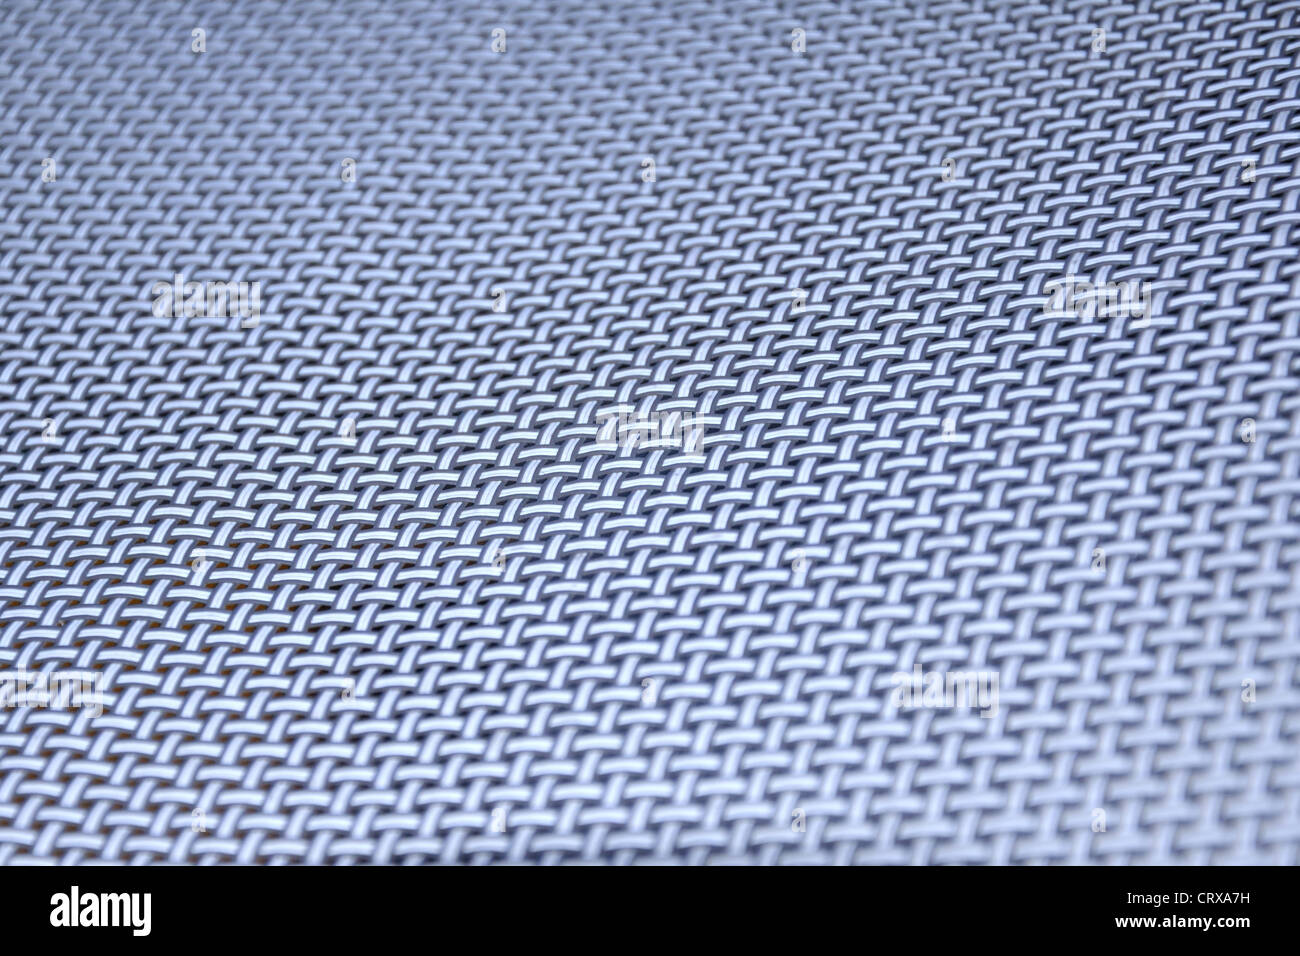 Woven nylon mesh fabric covering Stock Photo